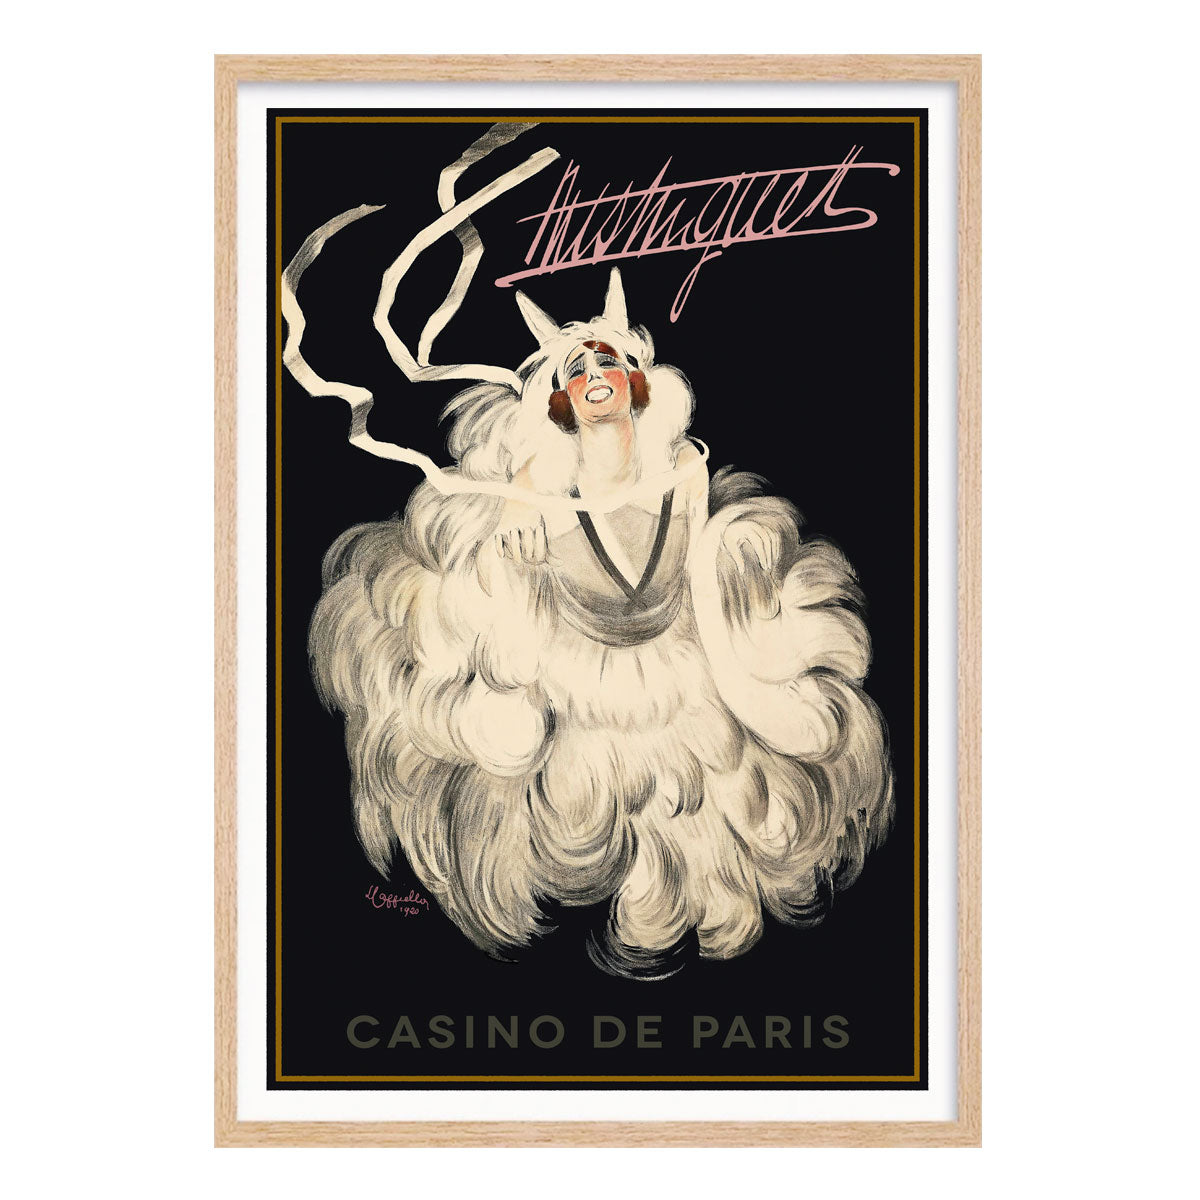 Casino de Paris retro vintage advertising poster in oak frame from Places We Luv